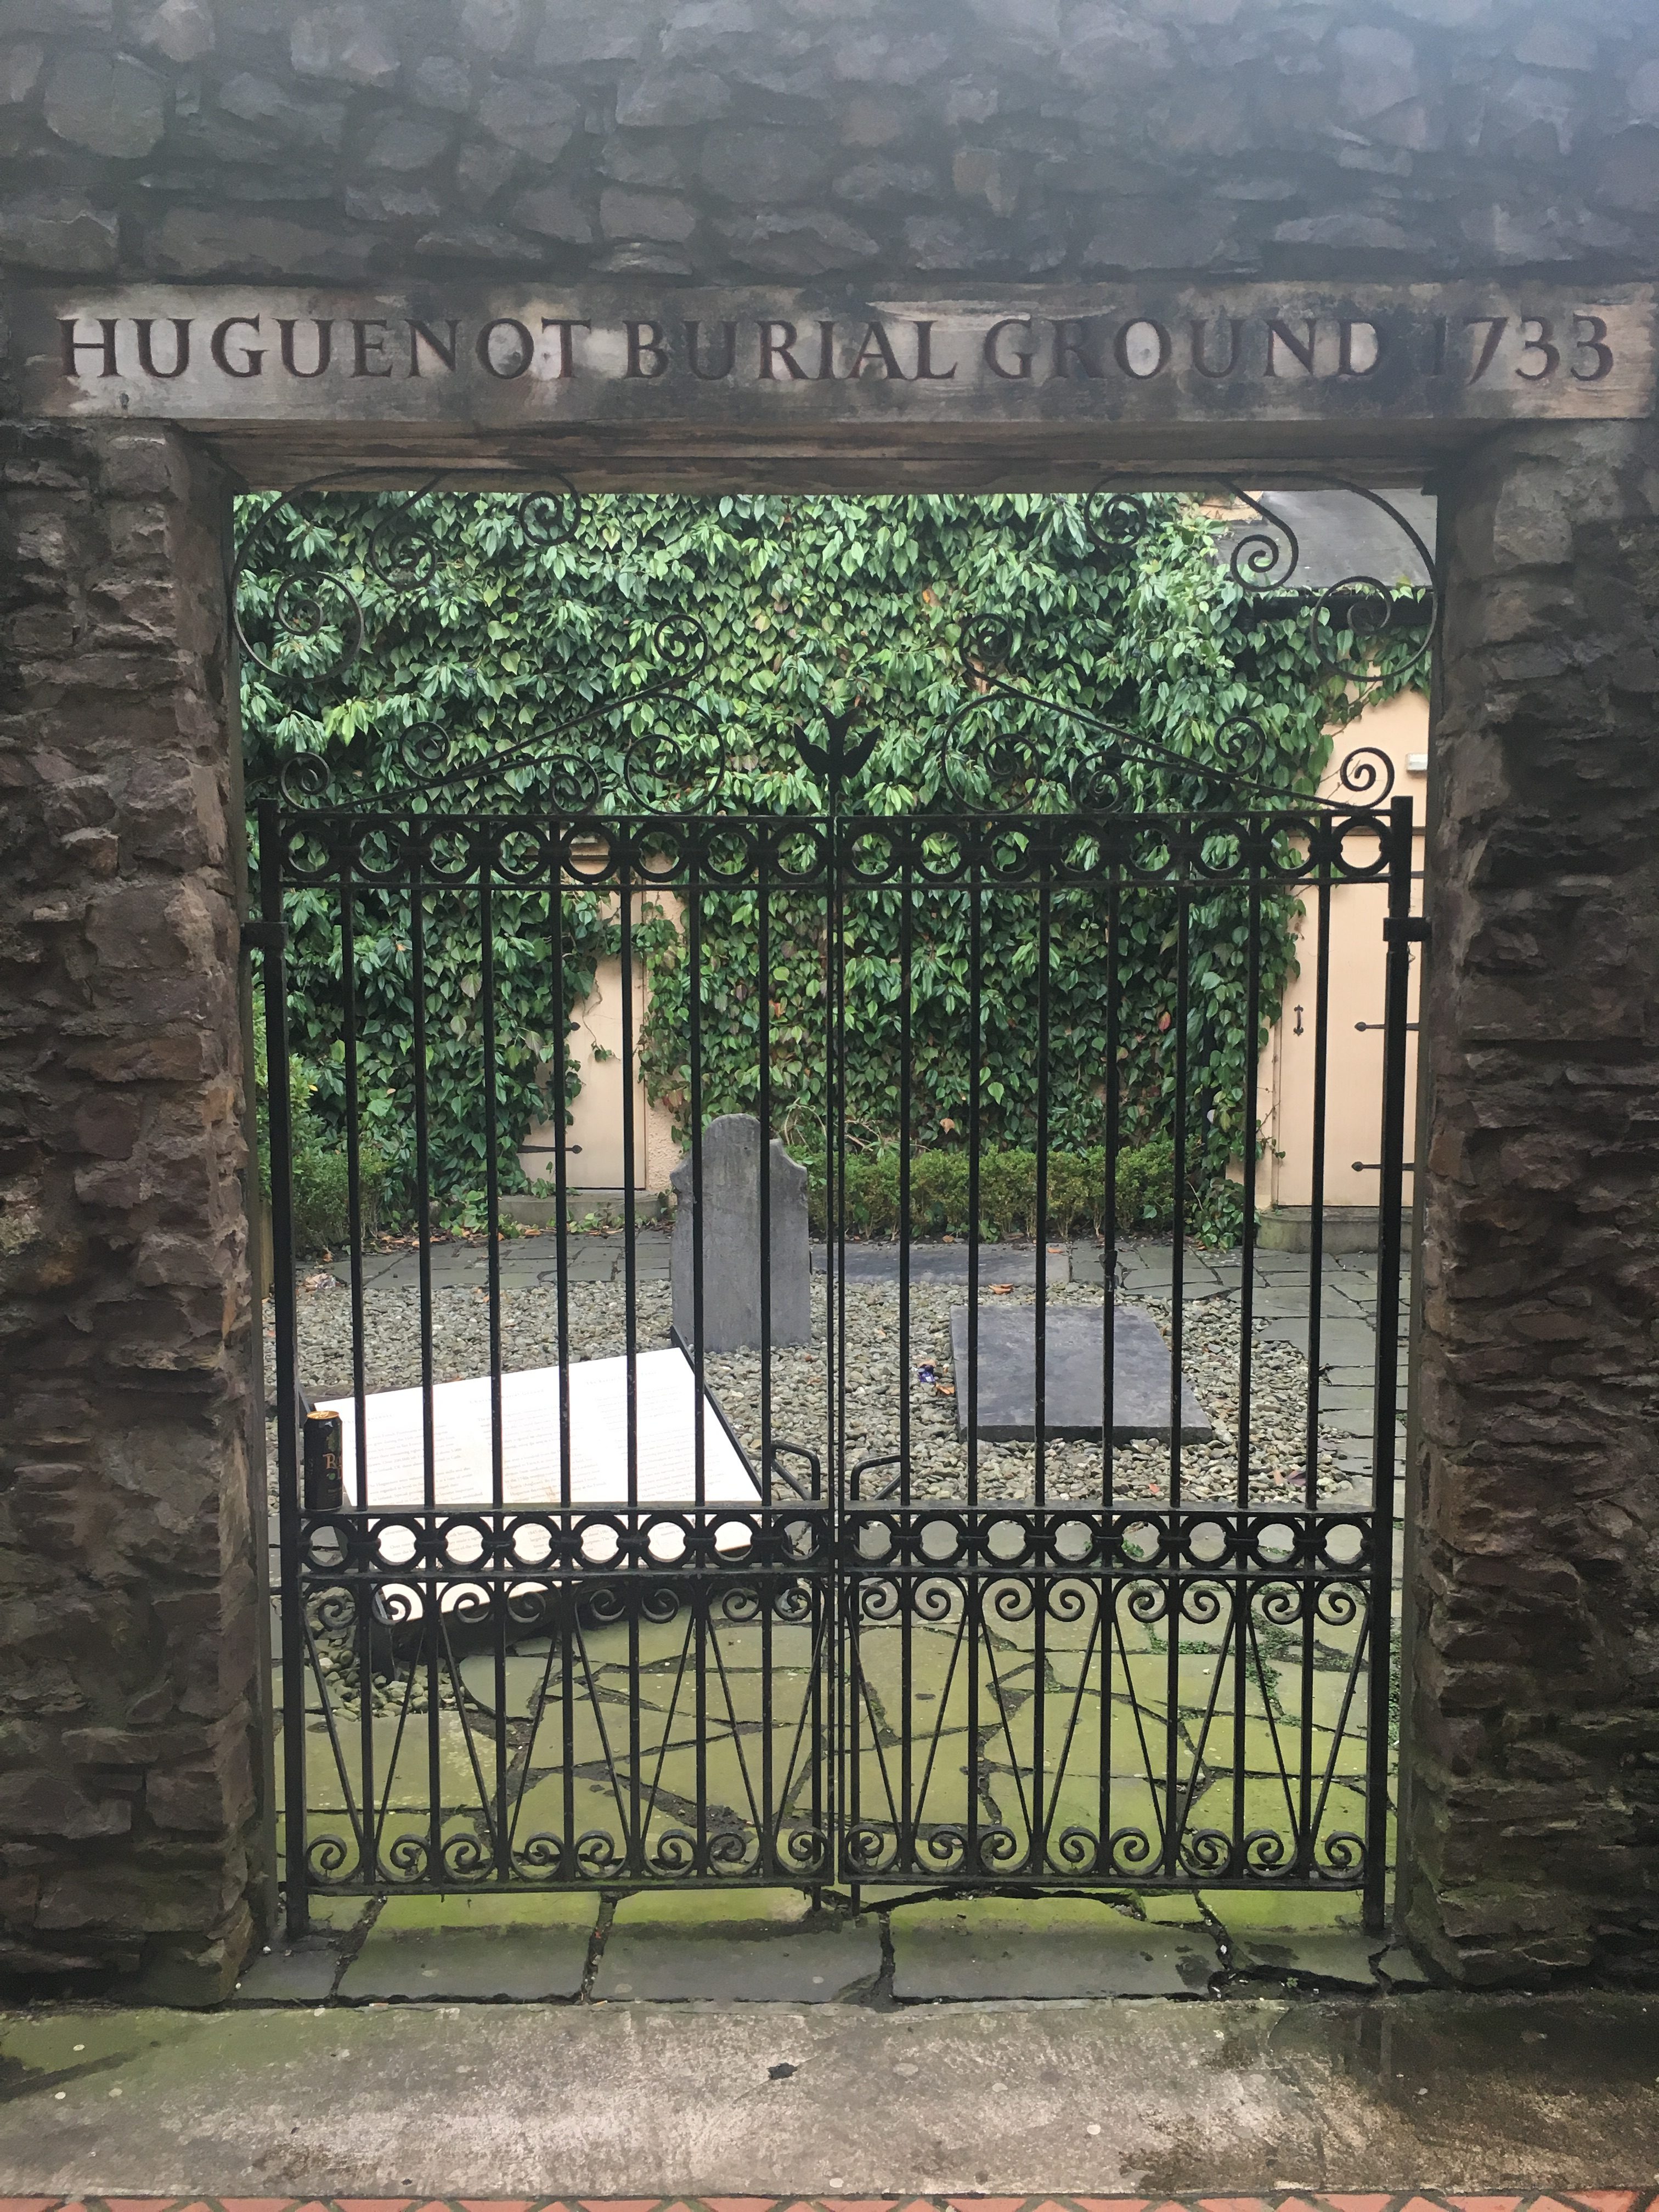 Huguenot graveyard, est. 1733, present day (picture: Kieran McCarthy)